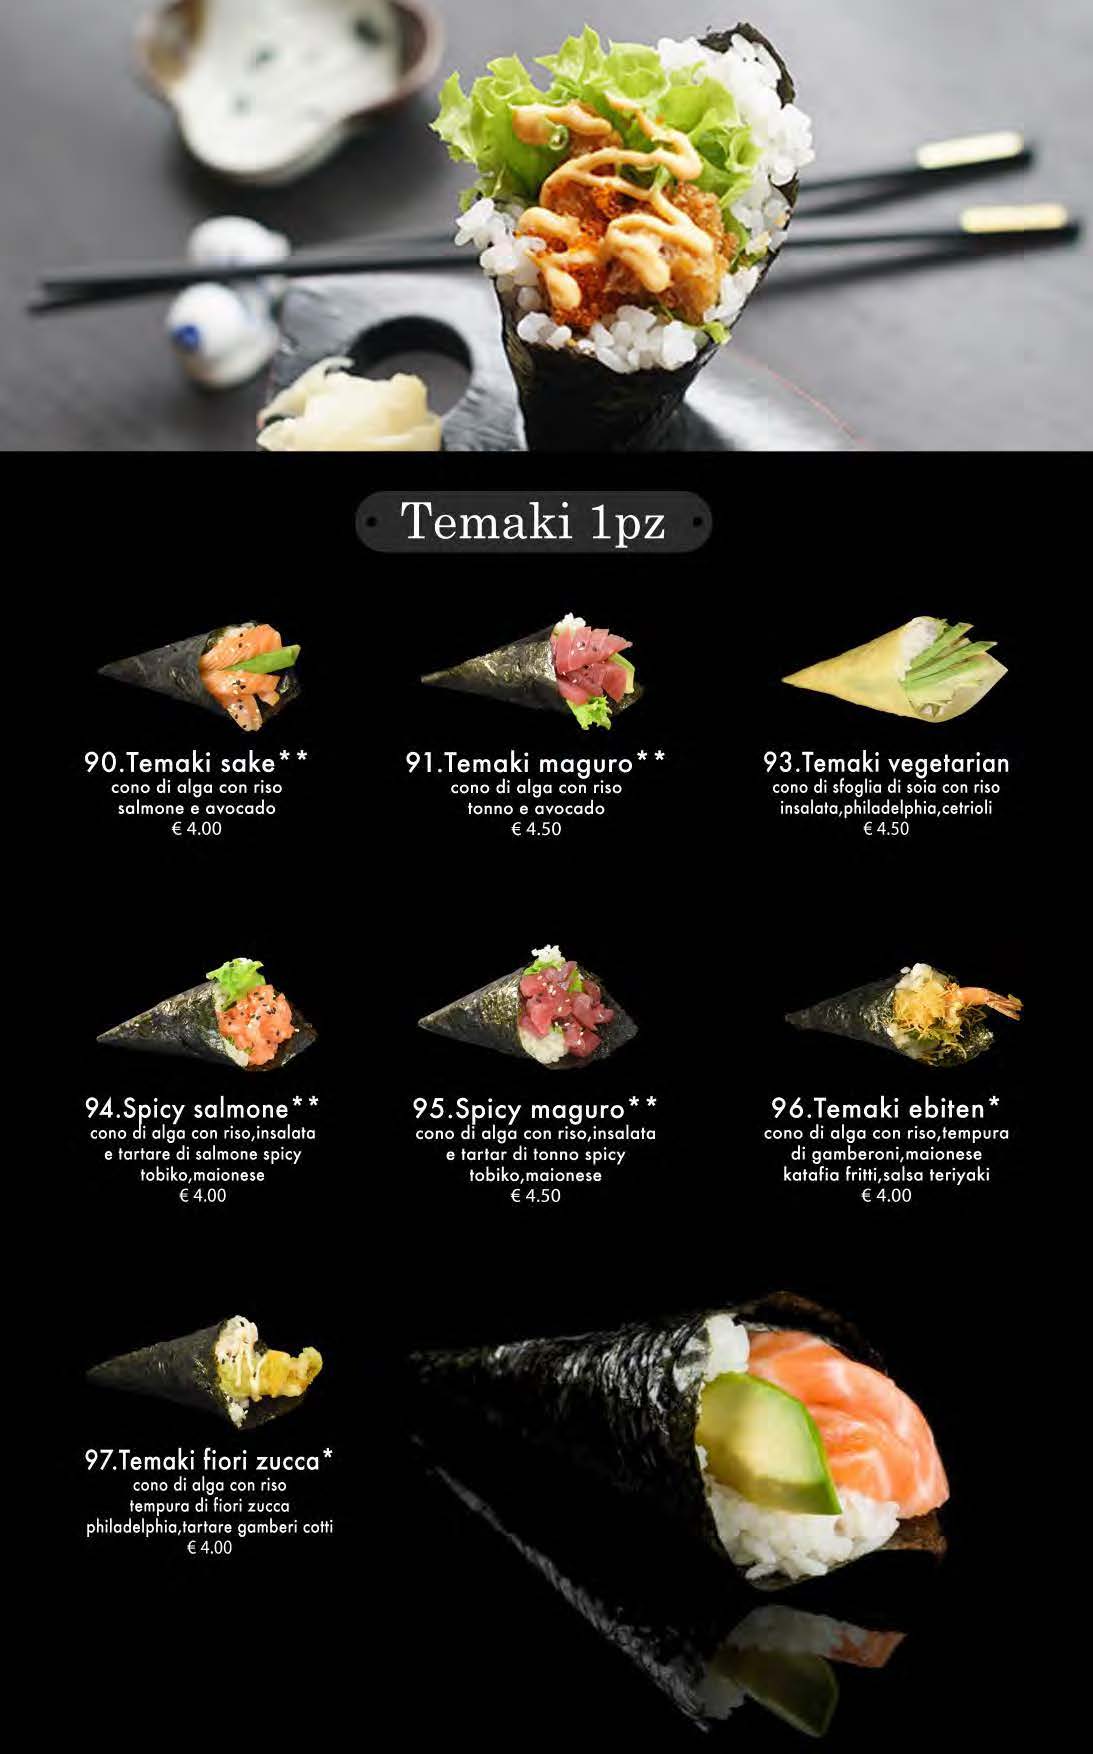 attimi ristorante giapponese padova menù pranzo pagina 05 temaki